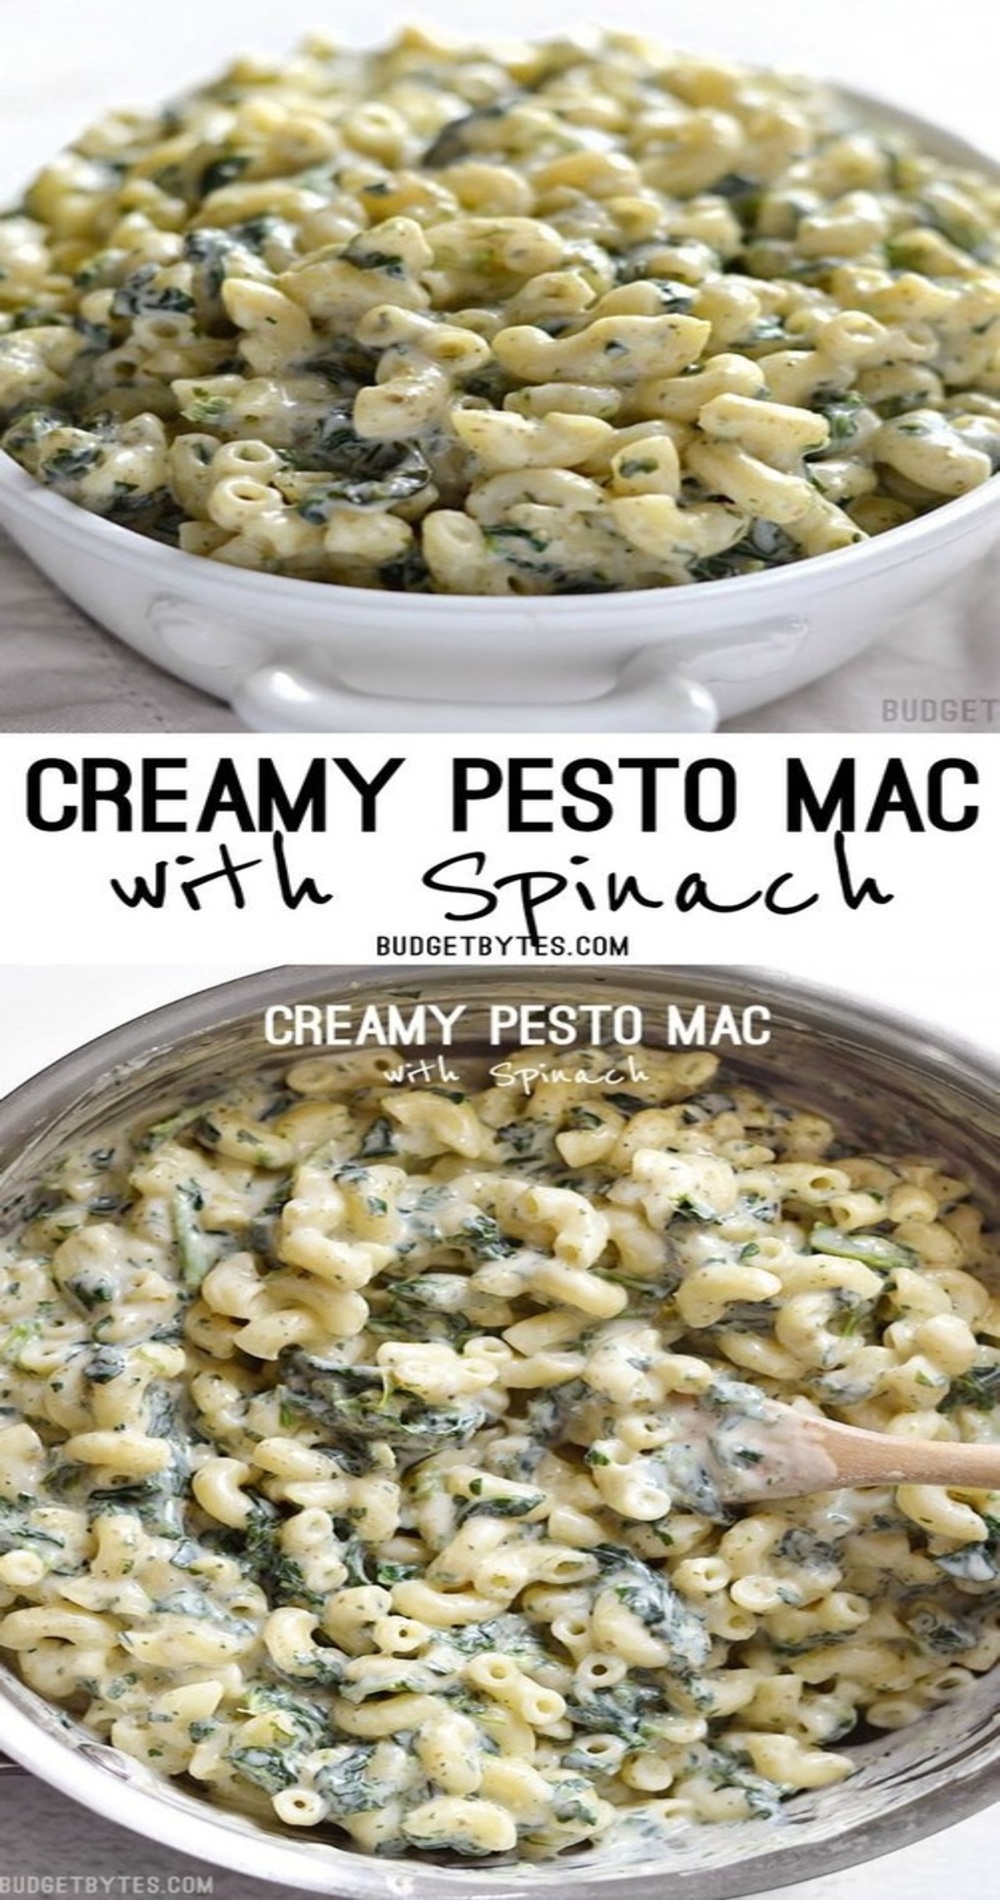 Creamy Pesto Mac With Spinach